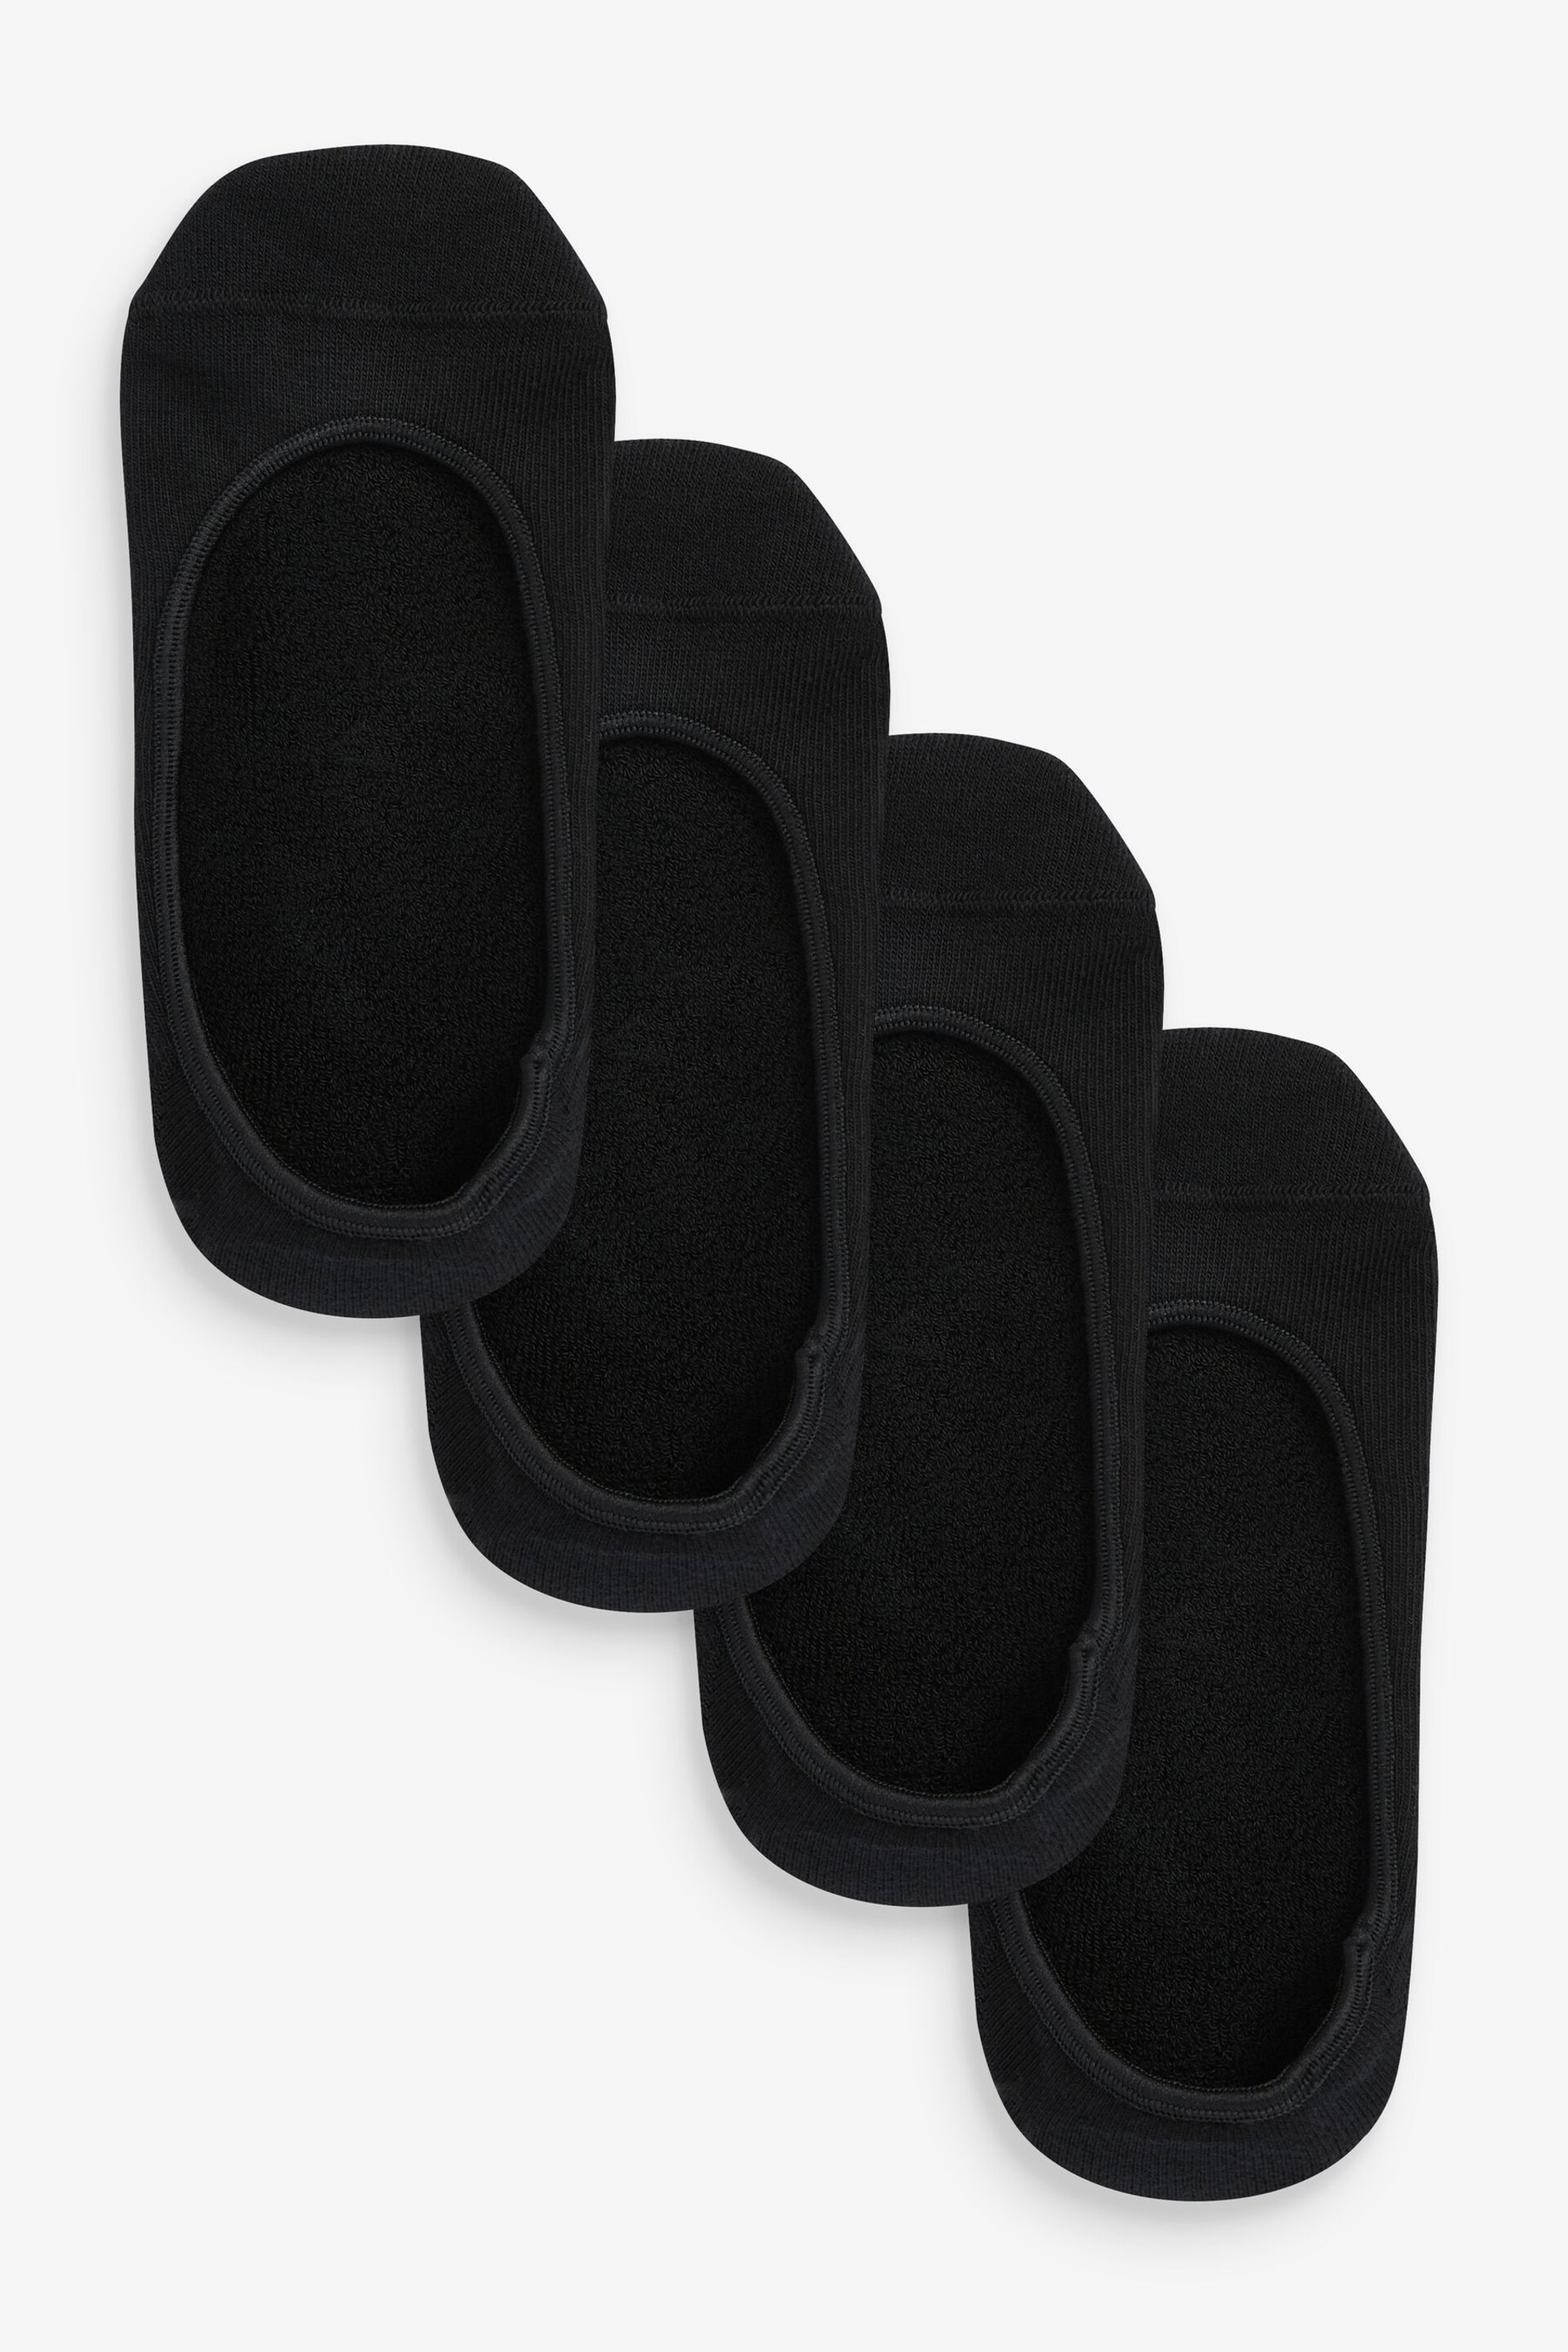 Black Cushion Sole Footsies 4 Pack - Image 1 of 2